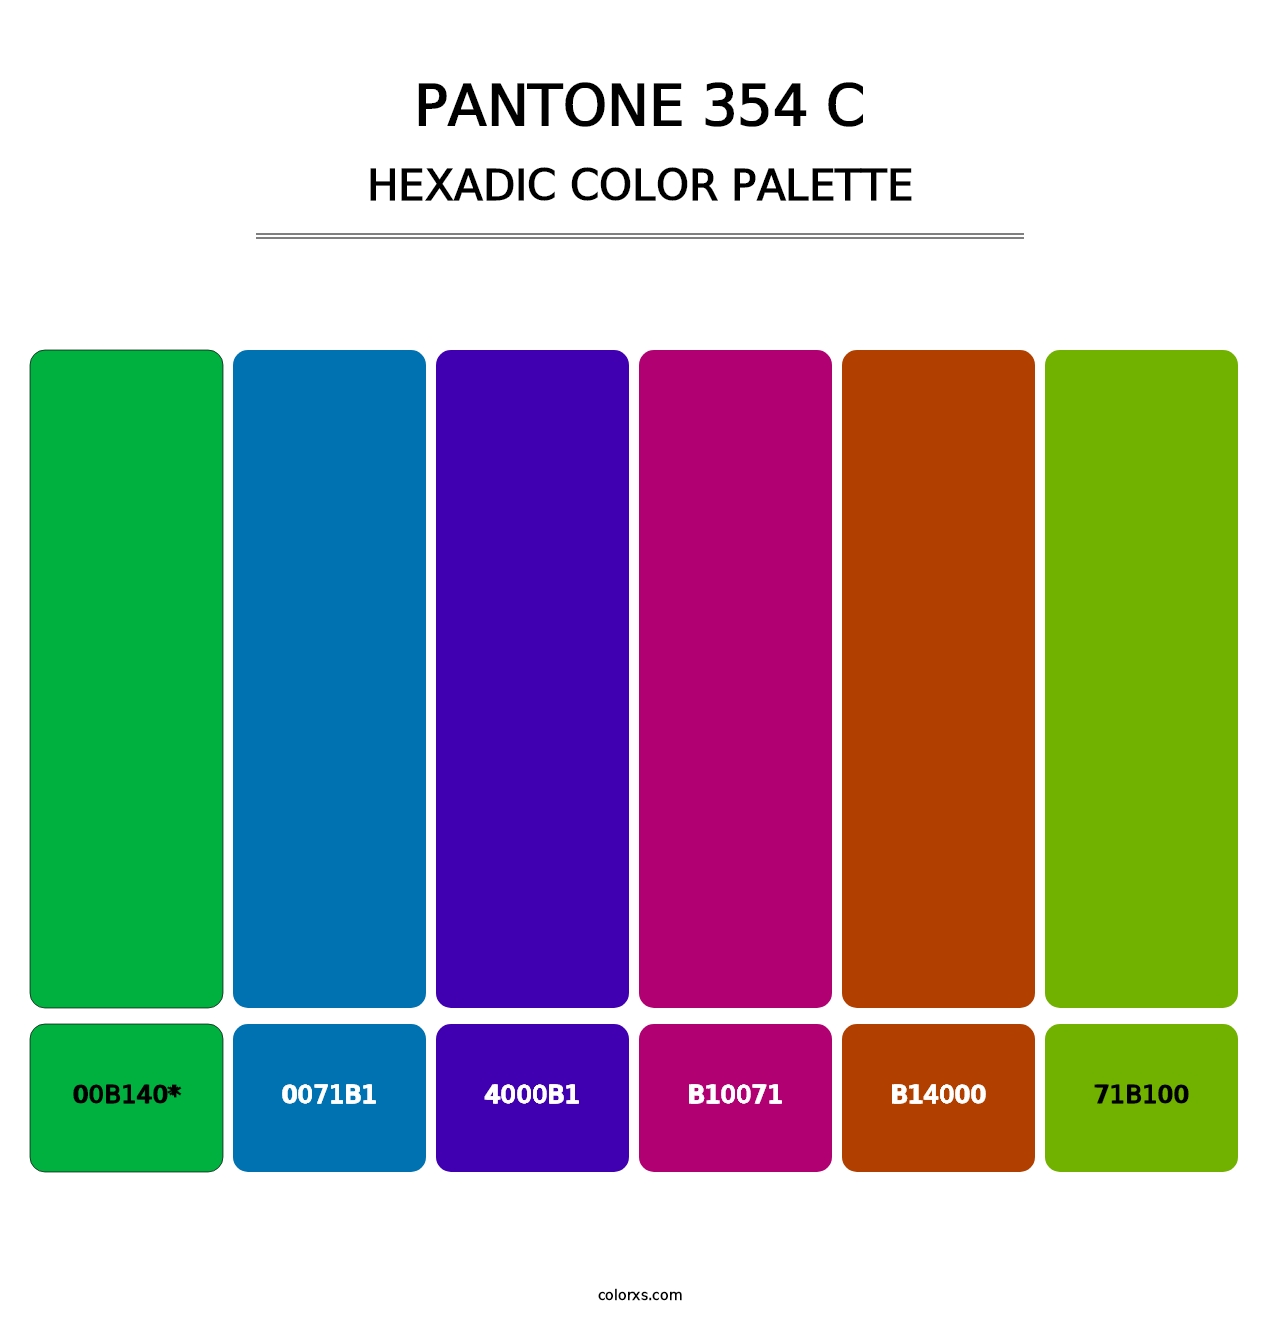 PANTONE 354 C - Hexadic Color Palette